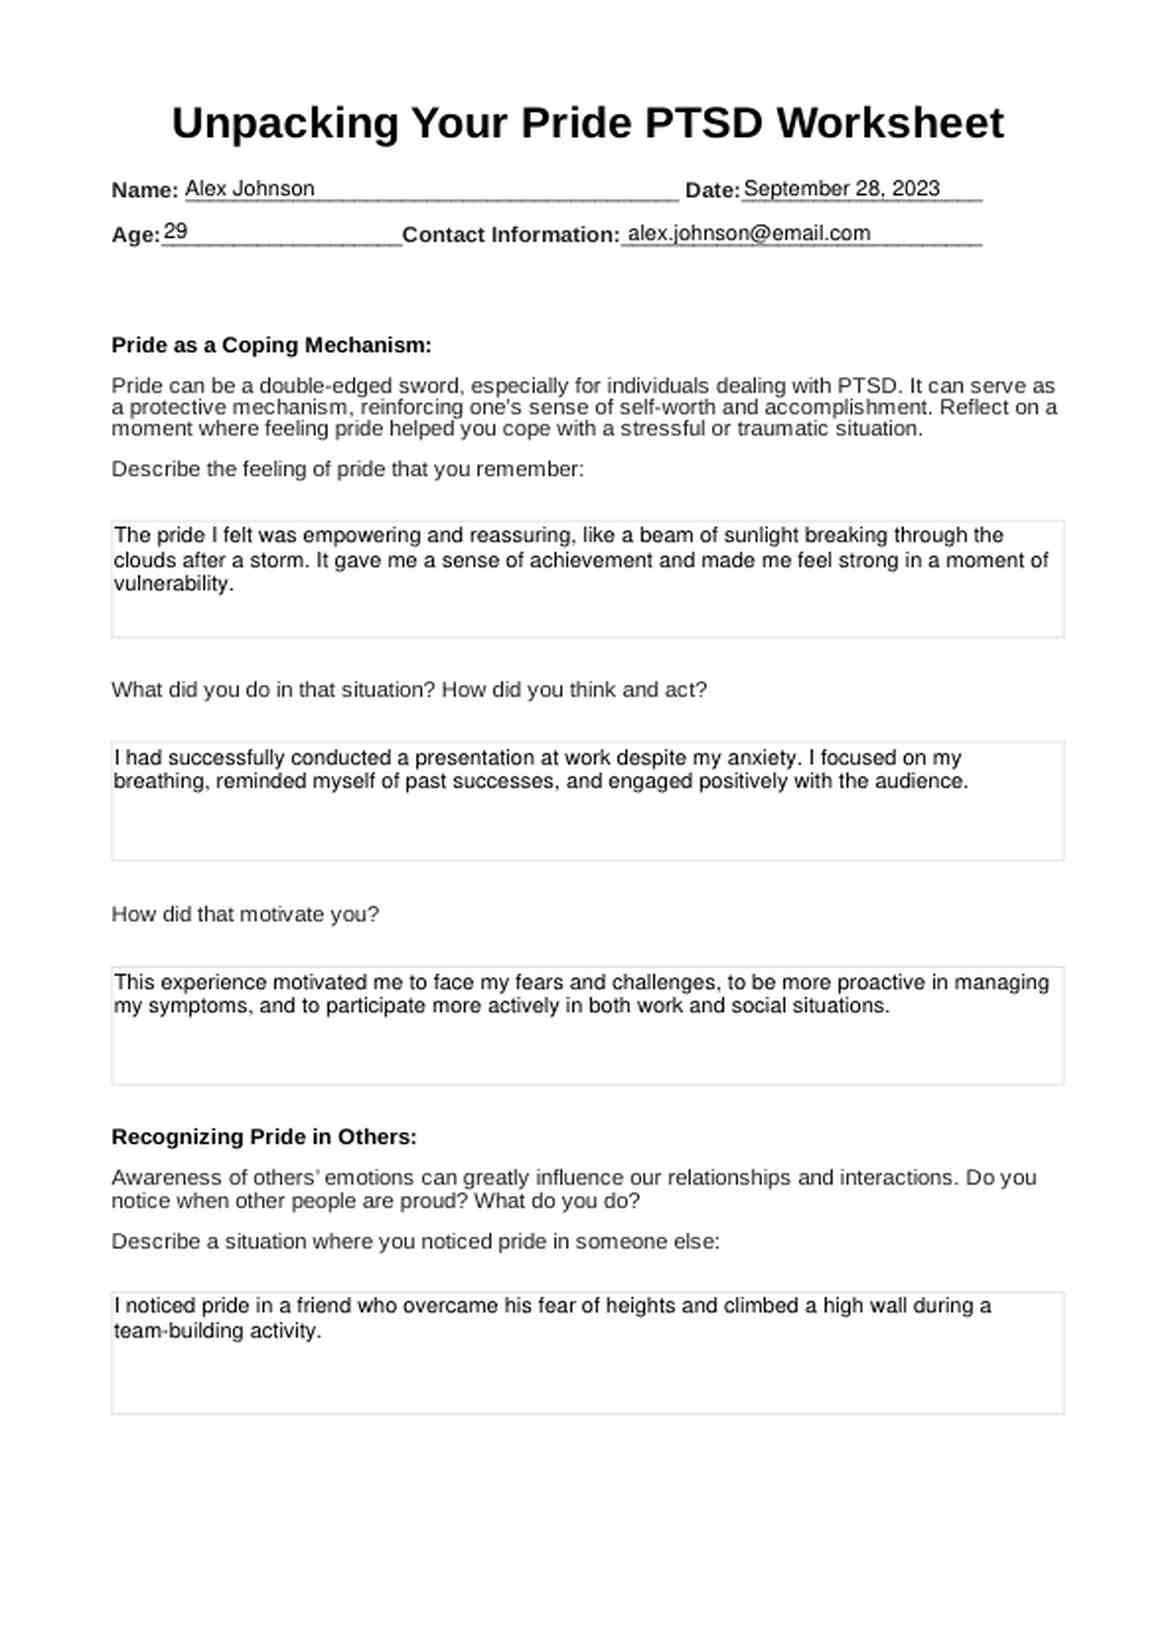 Unpacking Your Pride PTSD Worksheet PDF Example